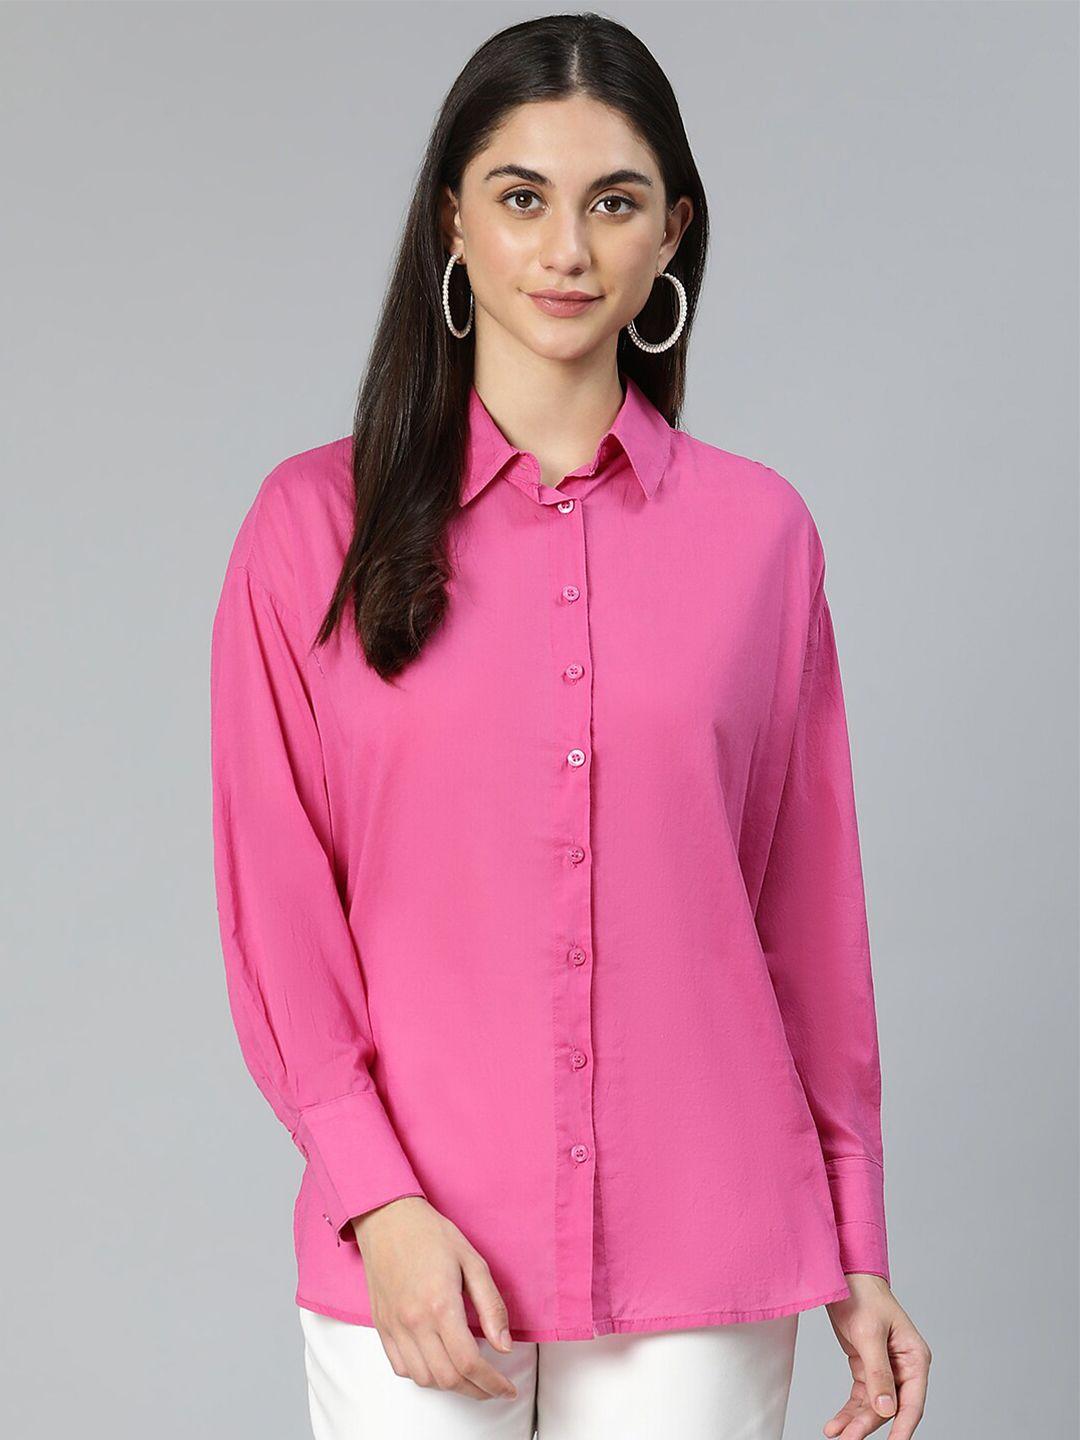 oxolloxo-women-pink-cotton-standard-casual-shirt